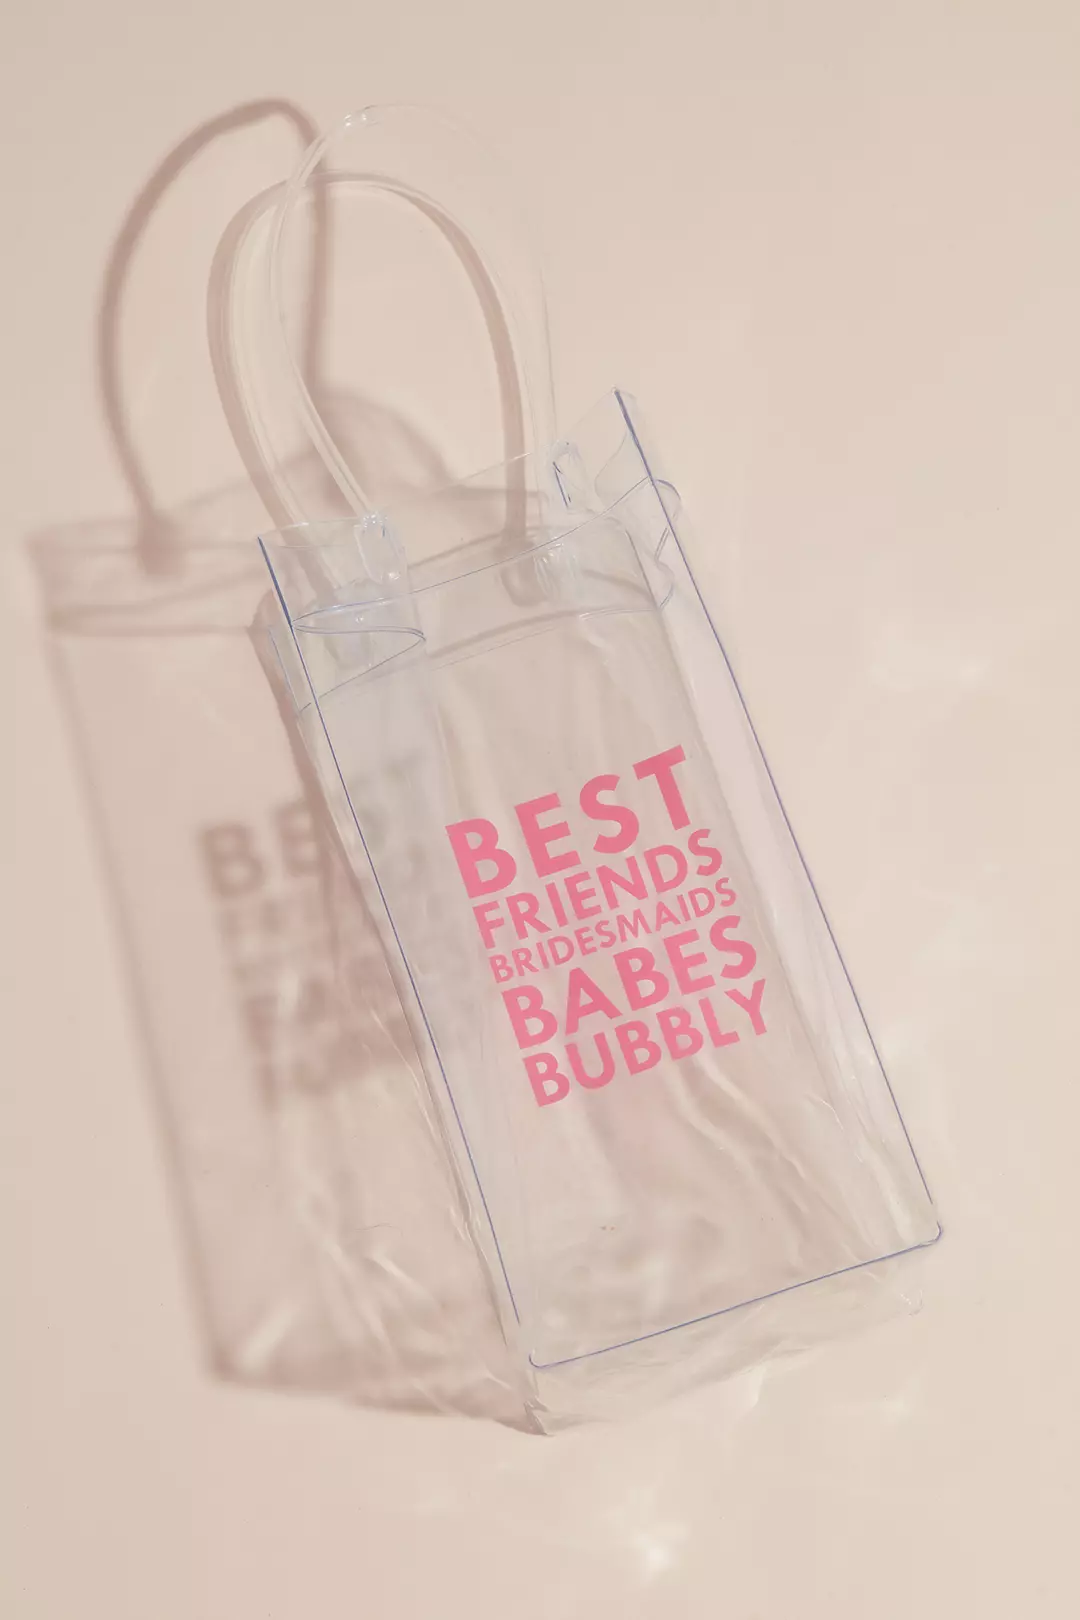 Best Friends Bridesmaids Babes Bubbly Wine Bag Image